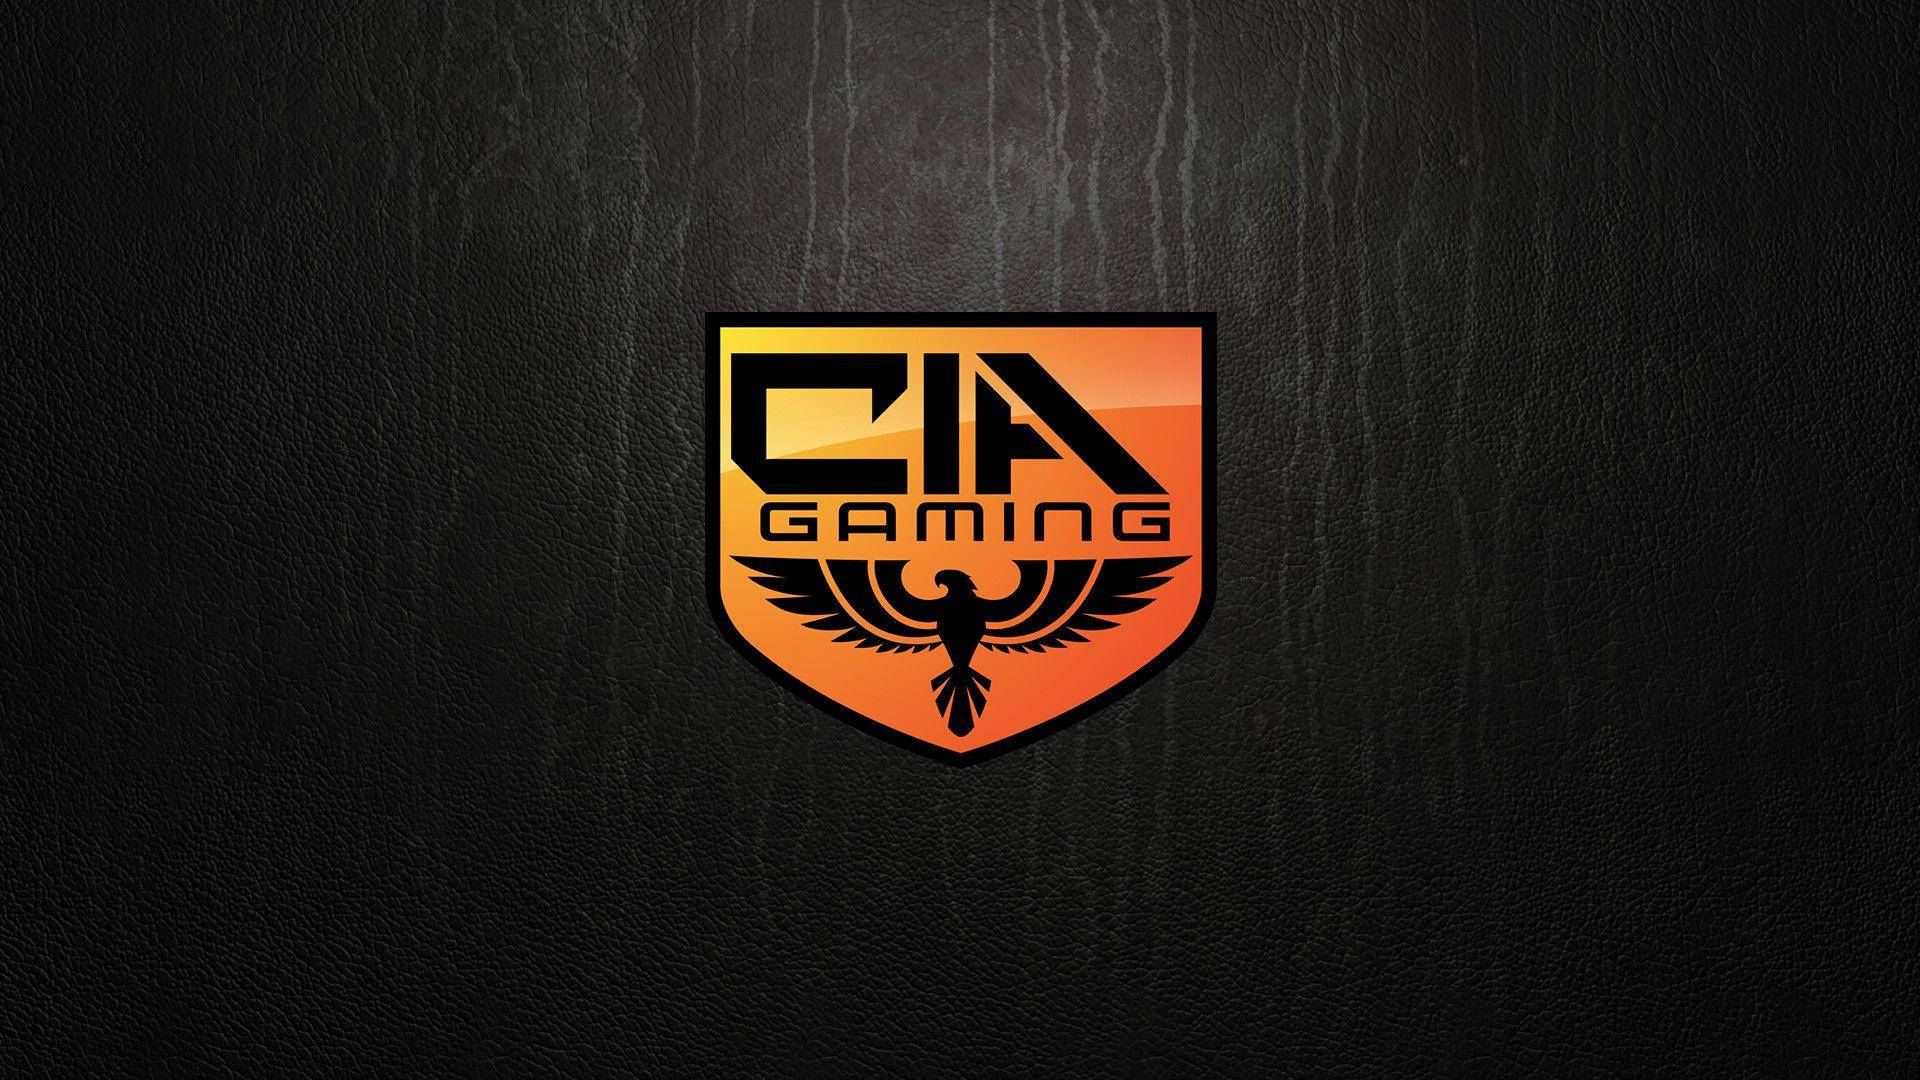 Cia Logo With Eagle Sign Wallpaper